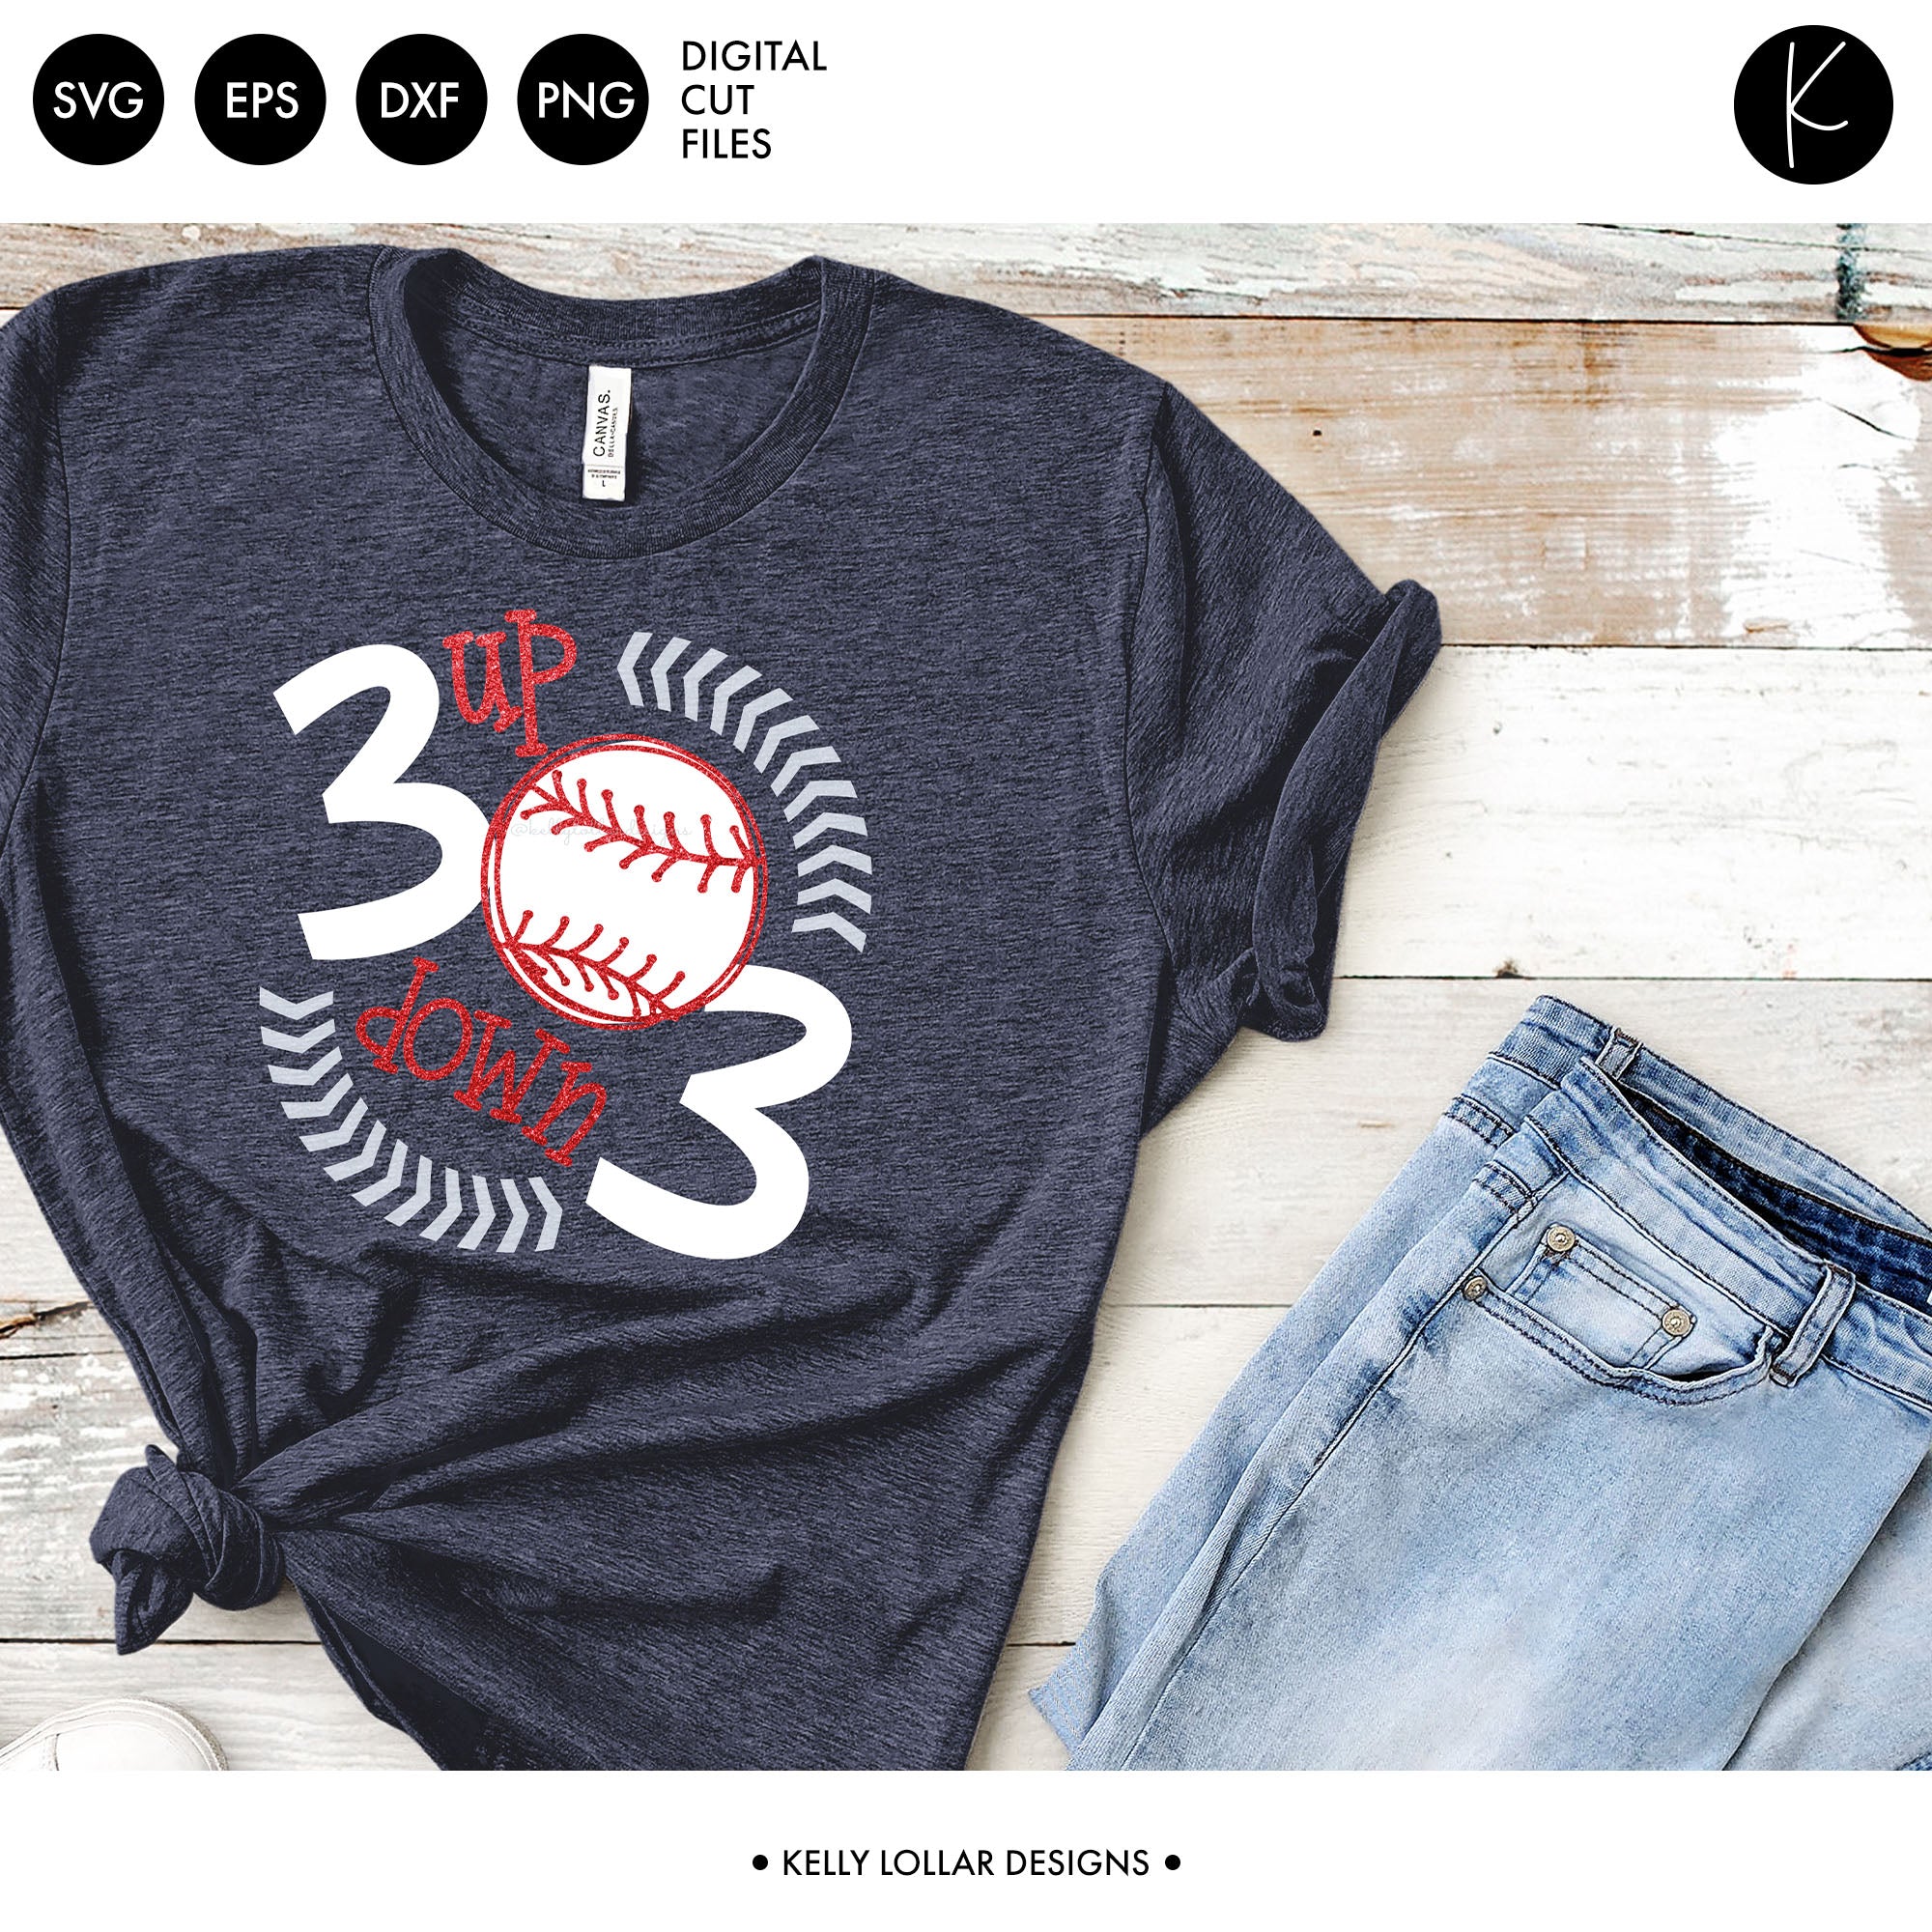 3 Up 3 Down Baseball or Softball Shirt SVG Cut File - Kelly Lollar